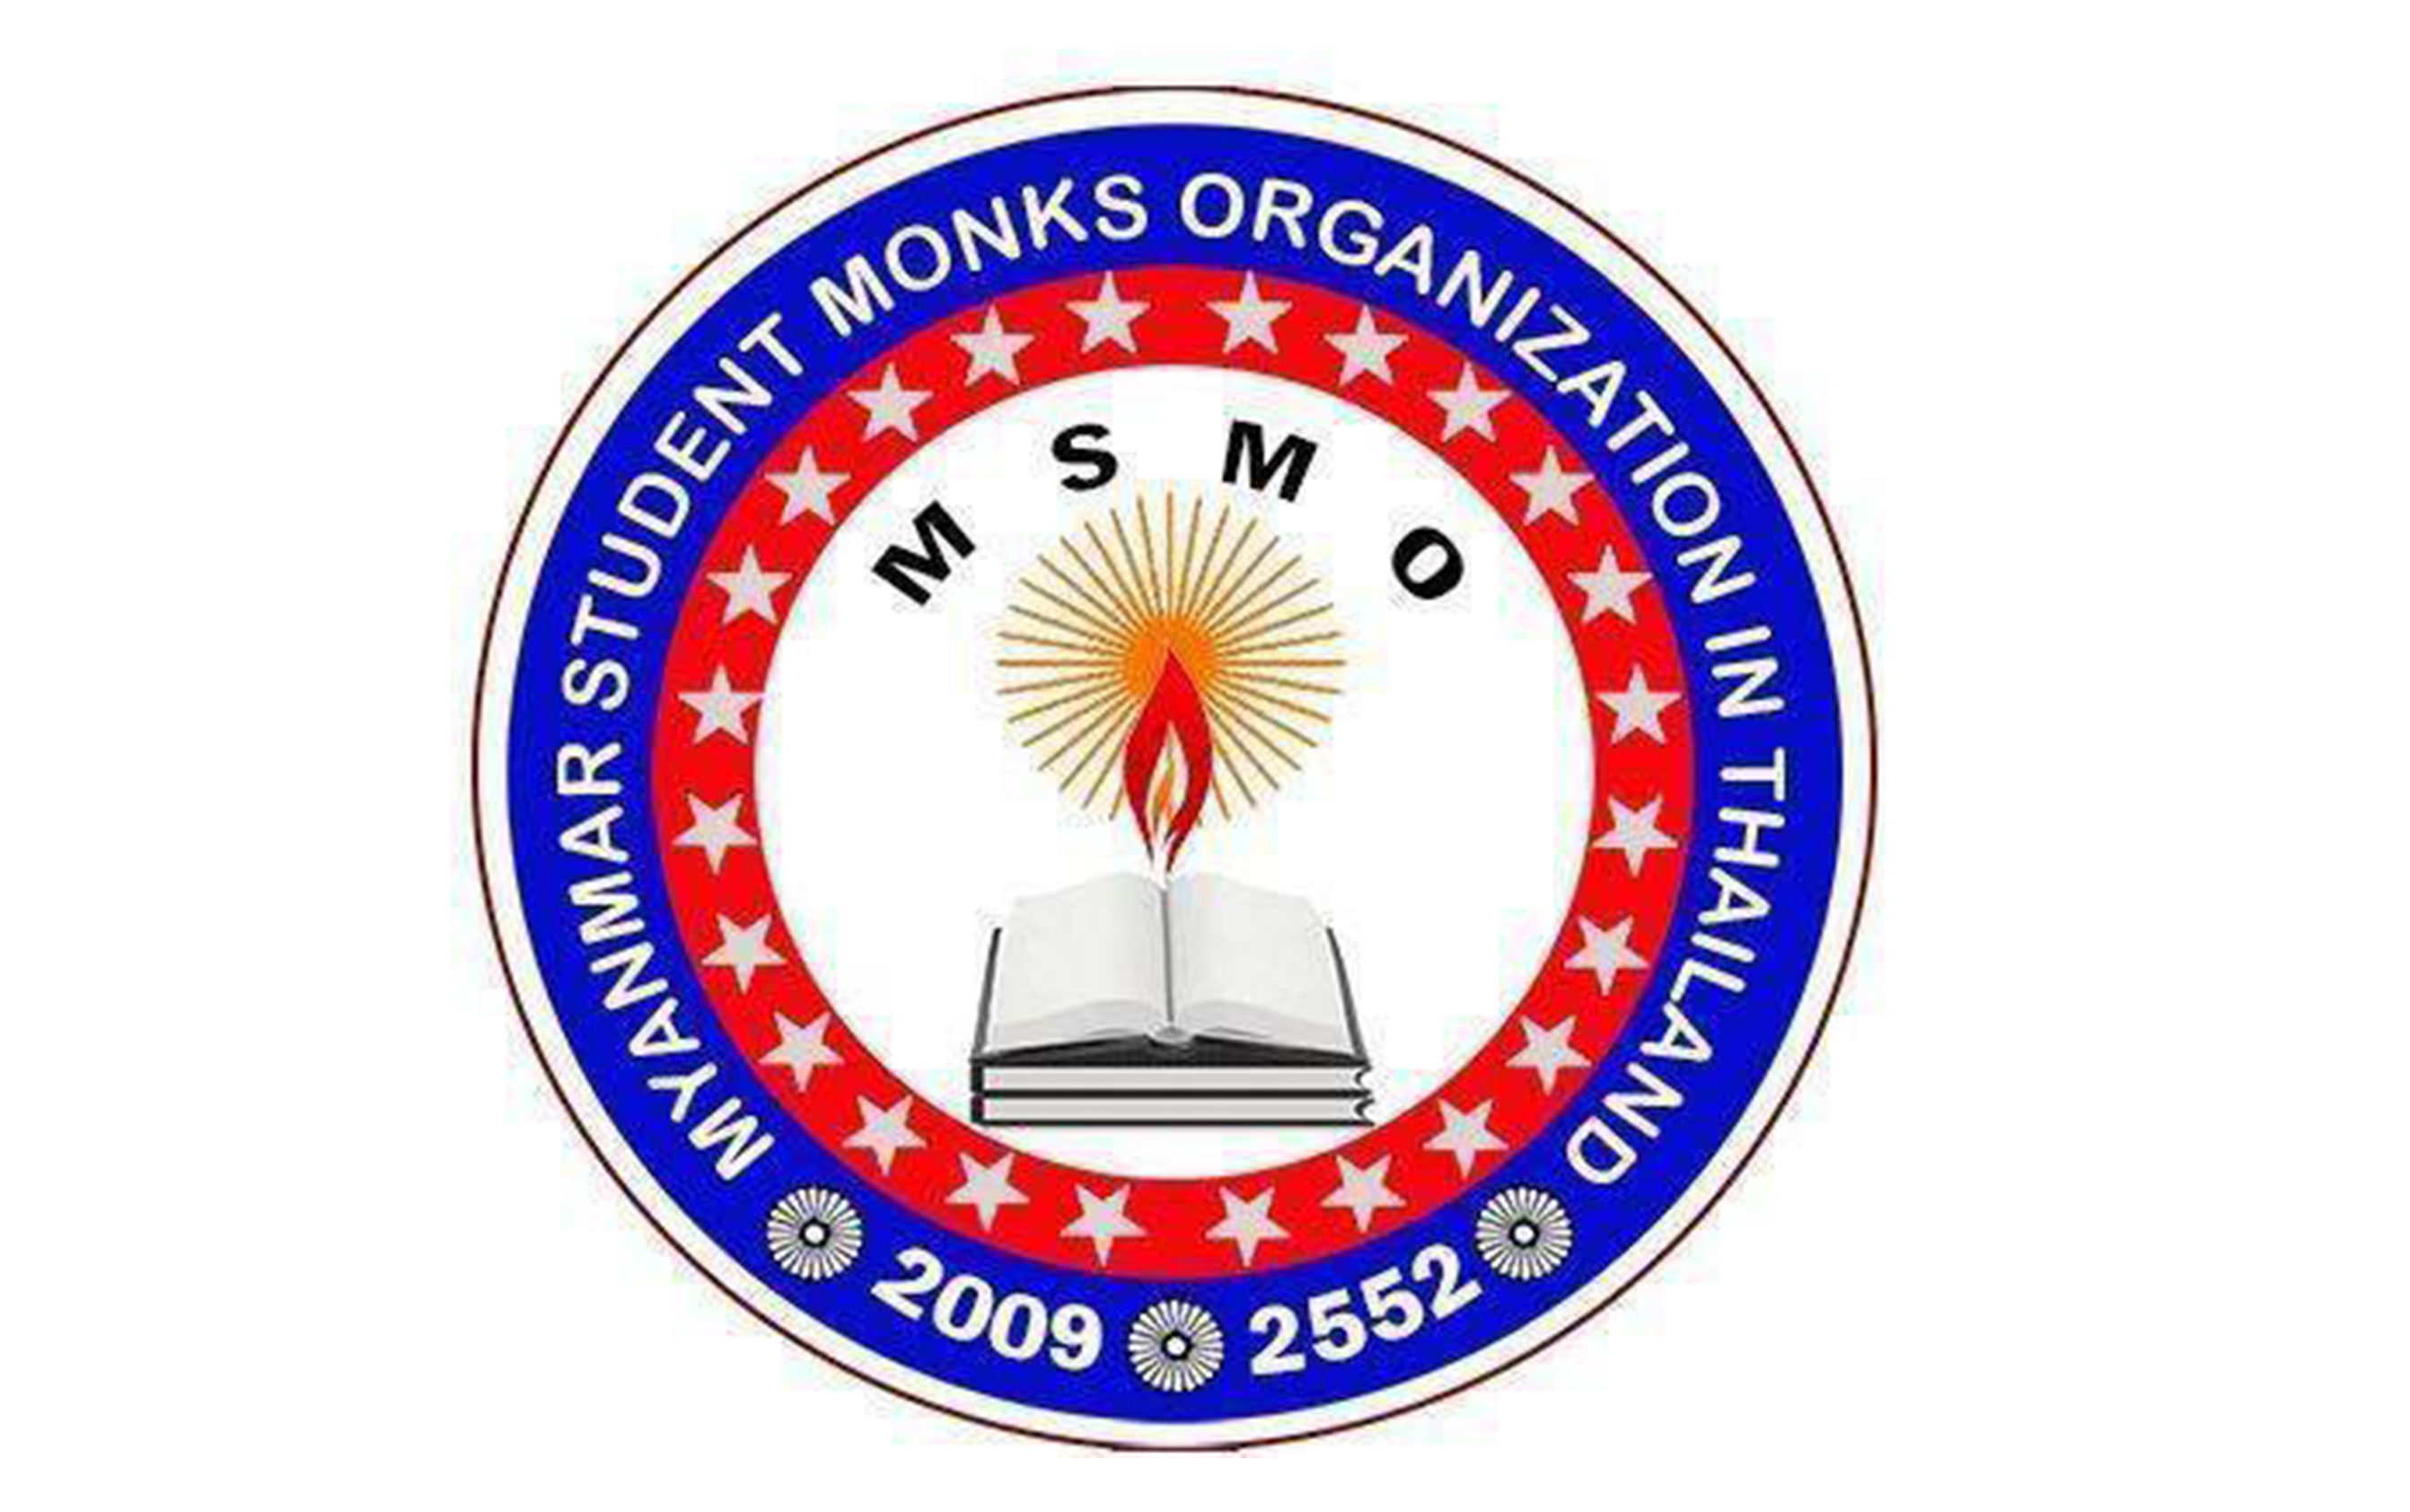 Myanmar Student Monks Organization in Thailand (MSMO)